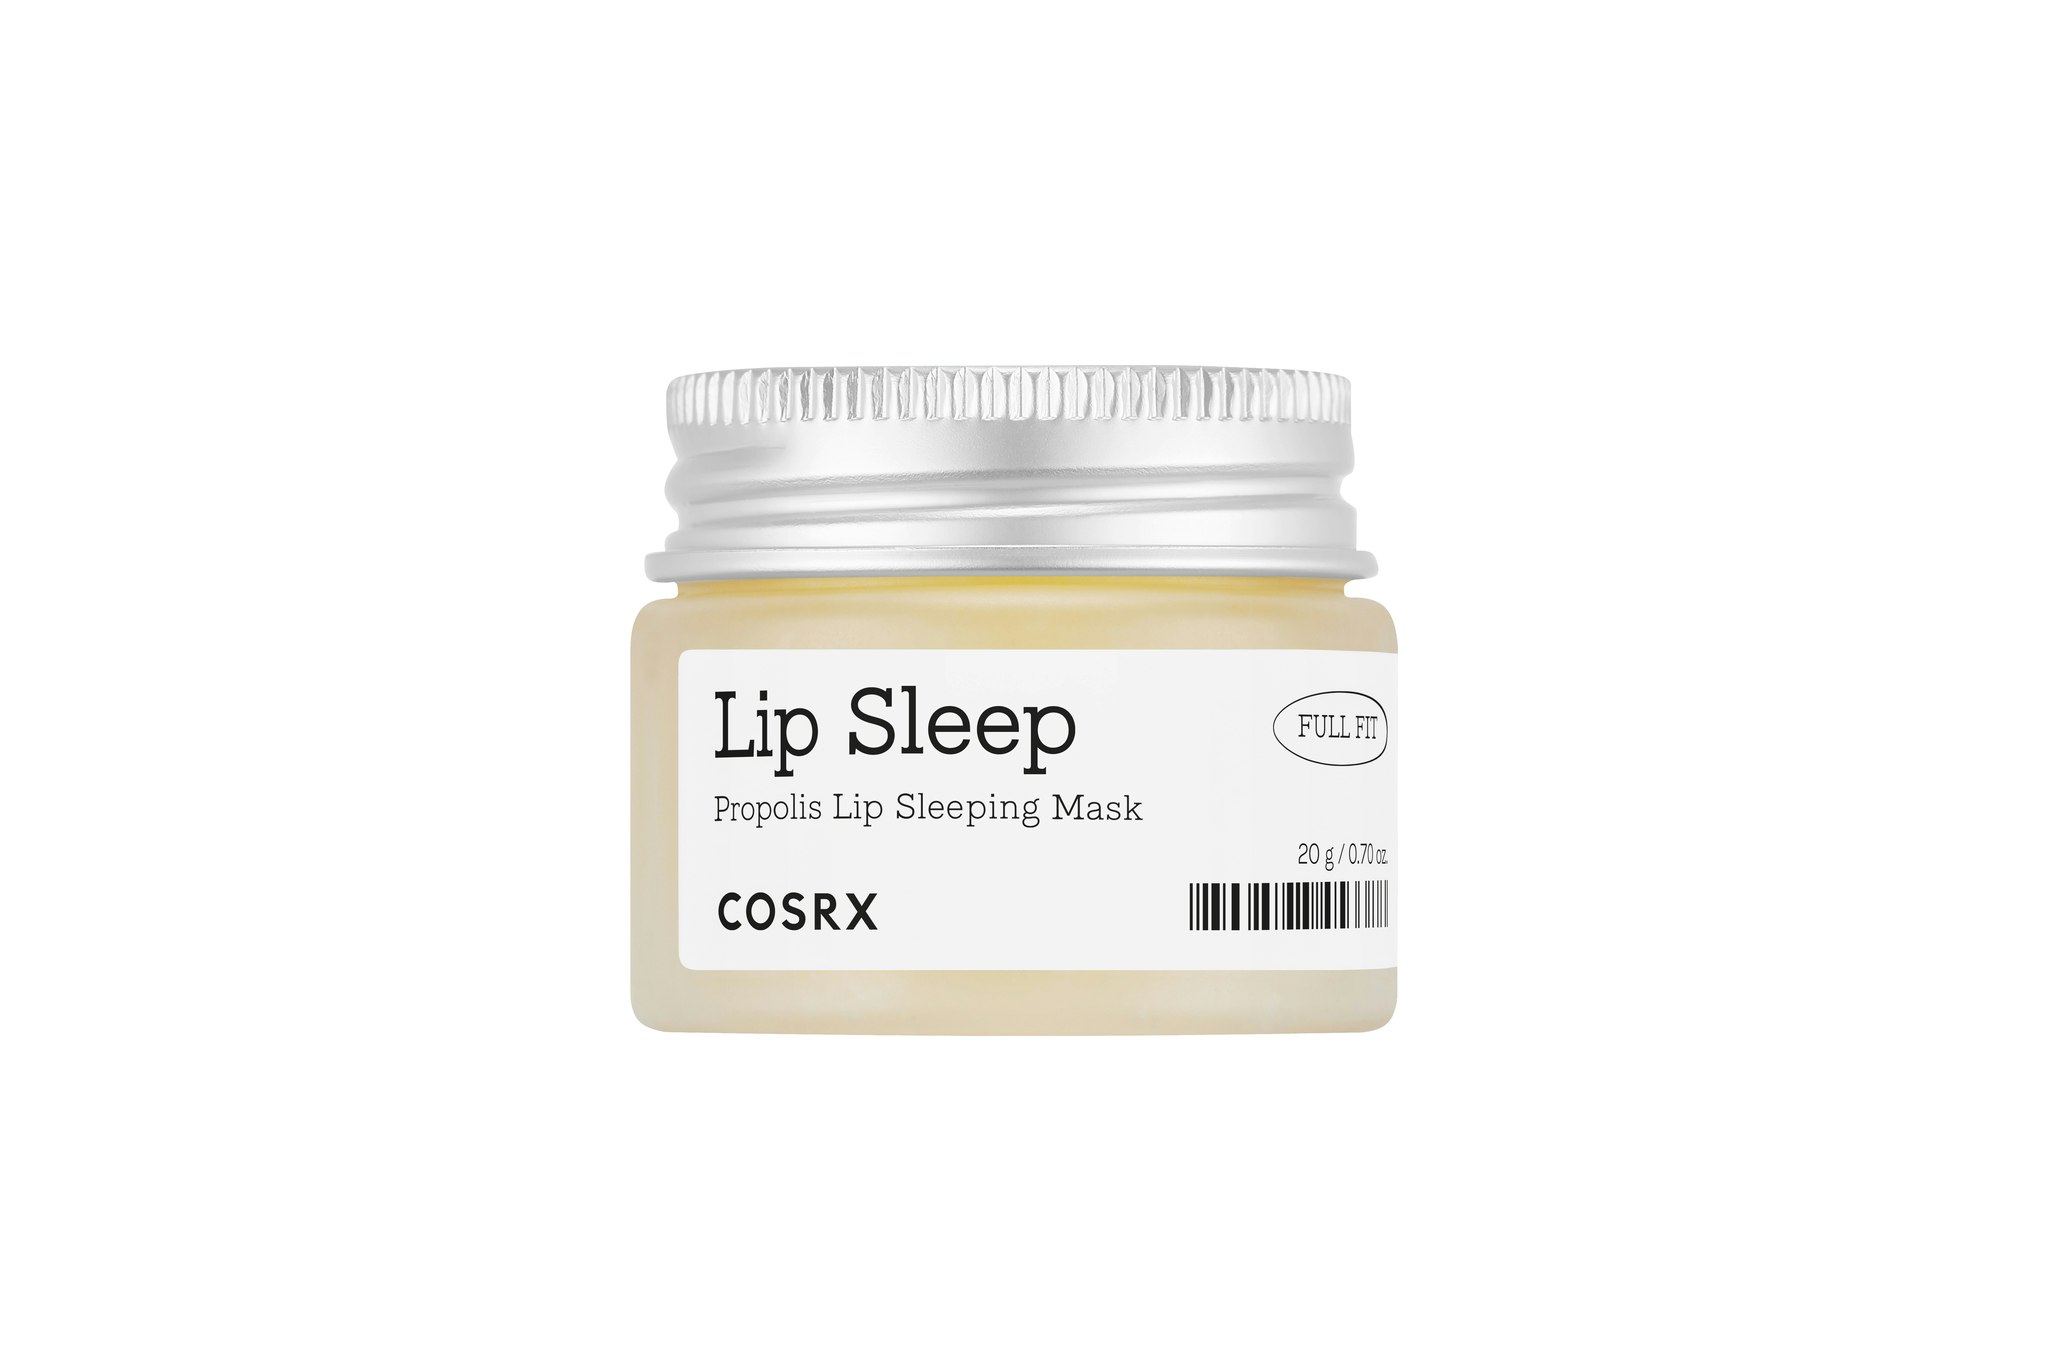 COSRX Full Fit Lip Sleep Propolis Lip Sleeping Mask